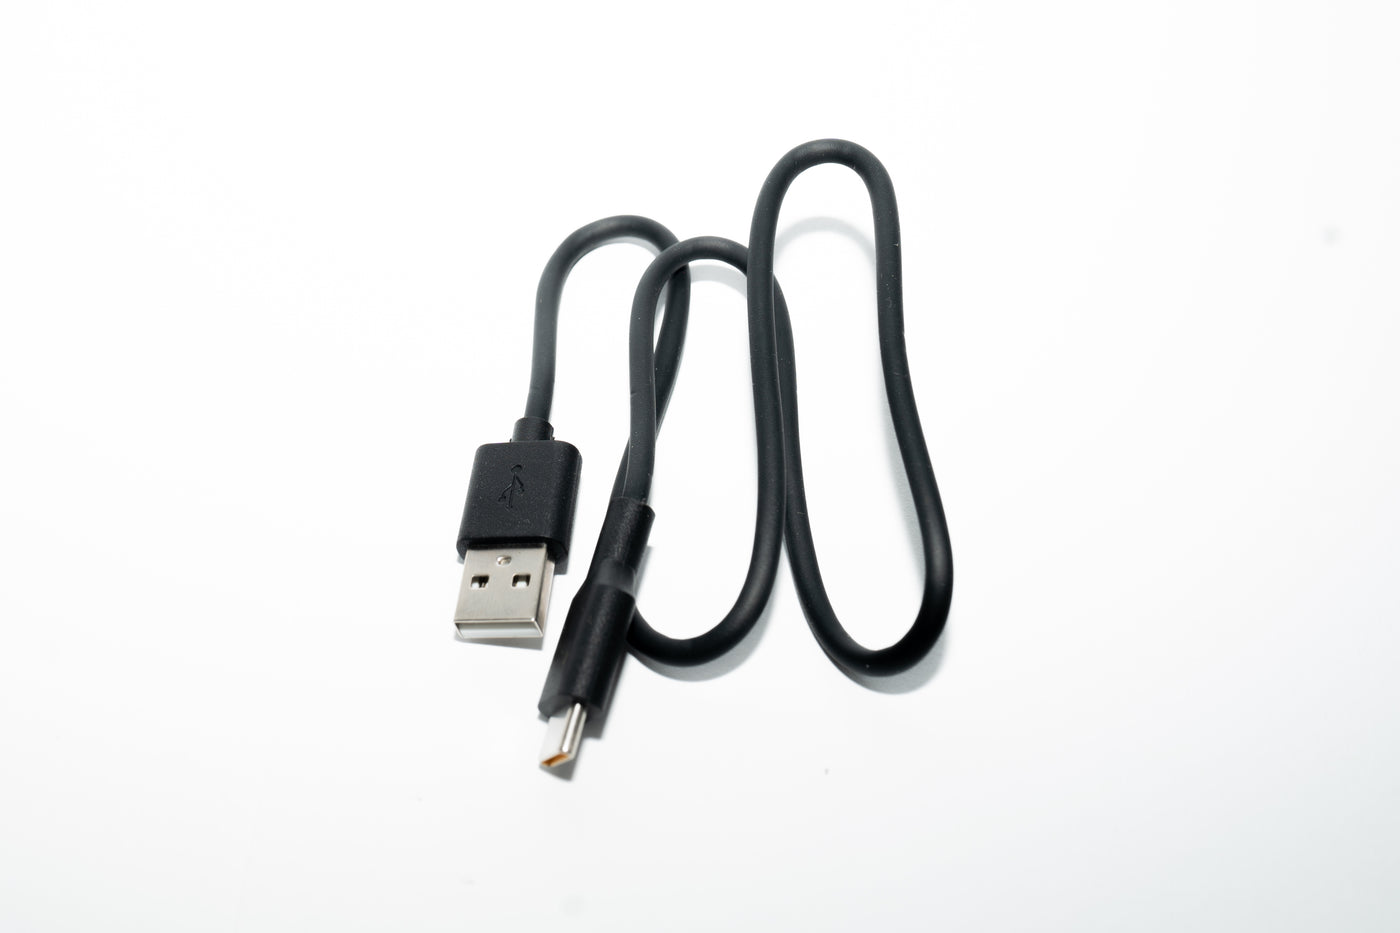 USB A - USB C Charging Cable